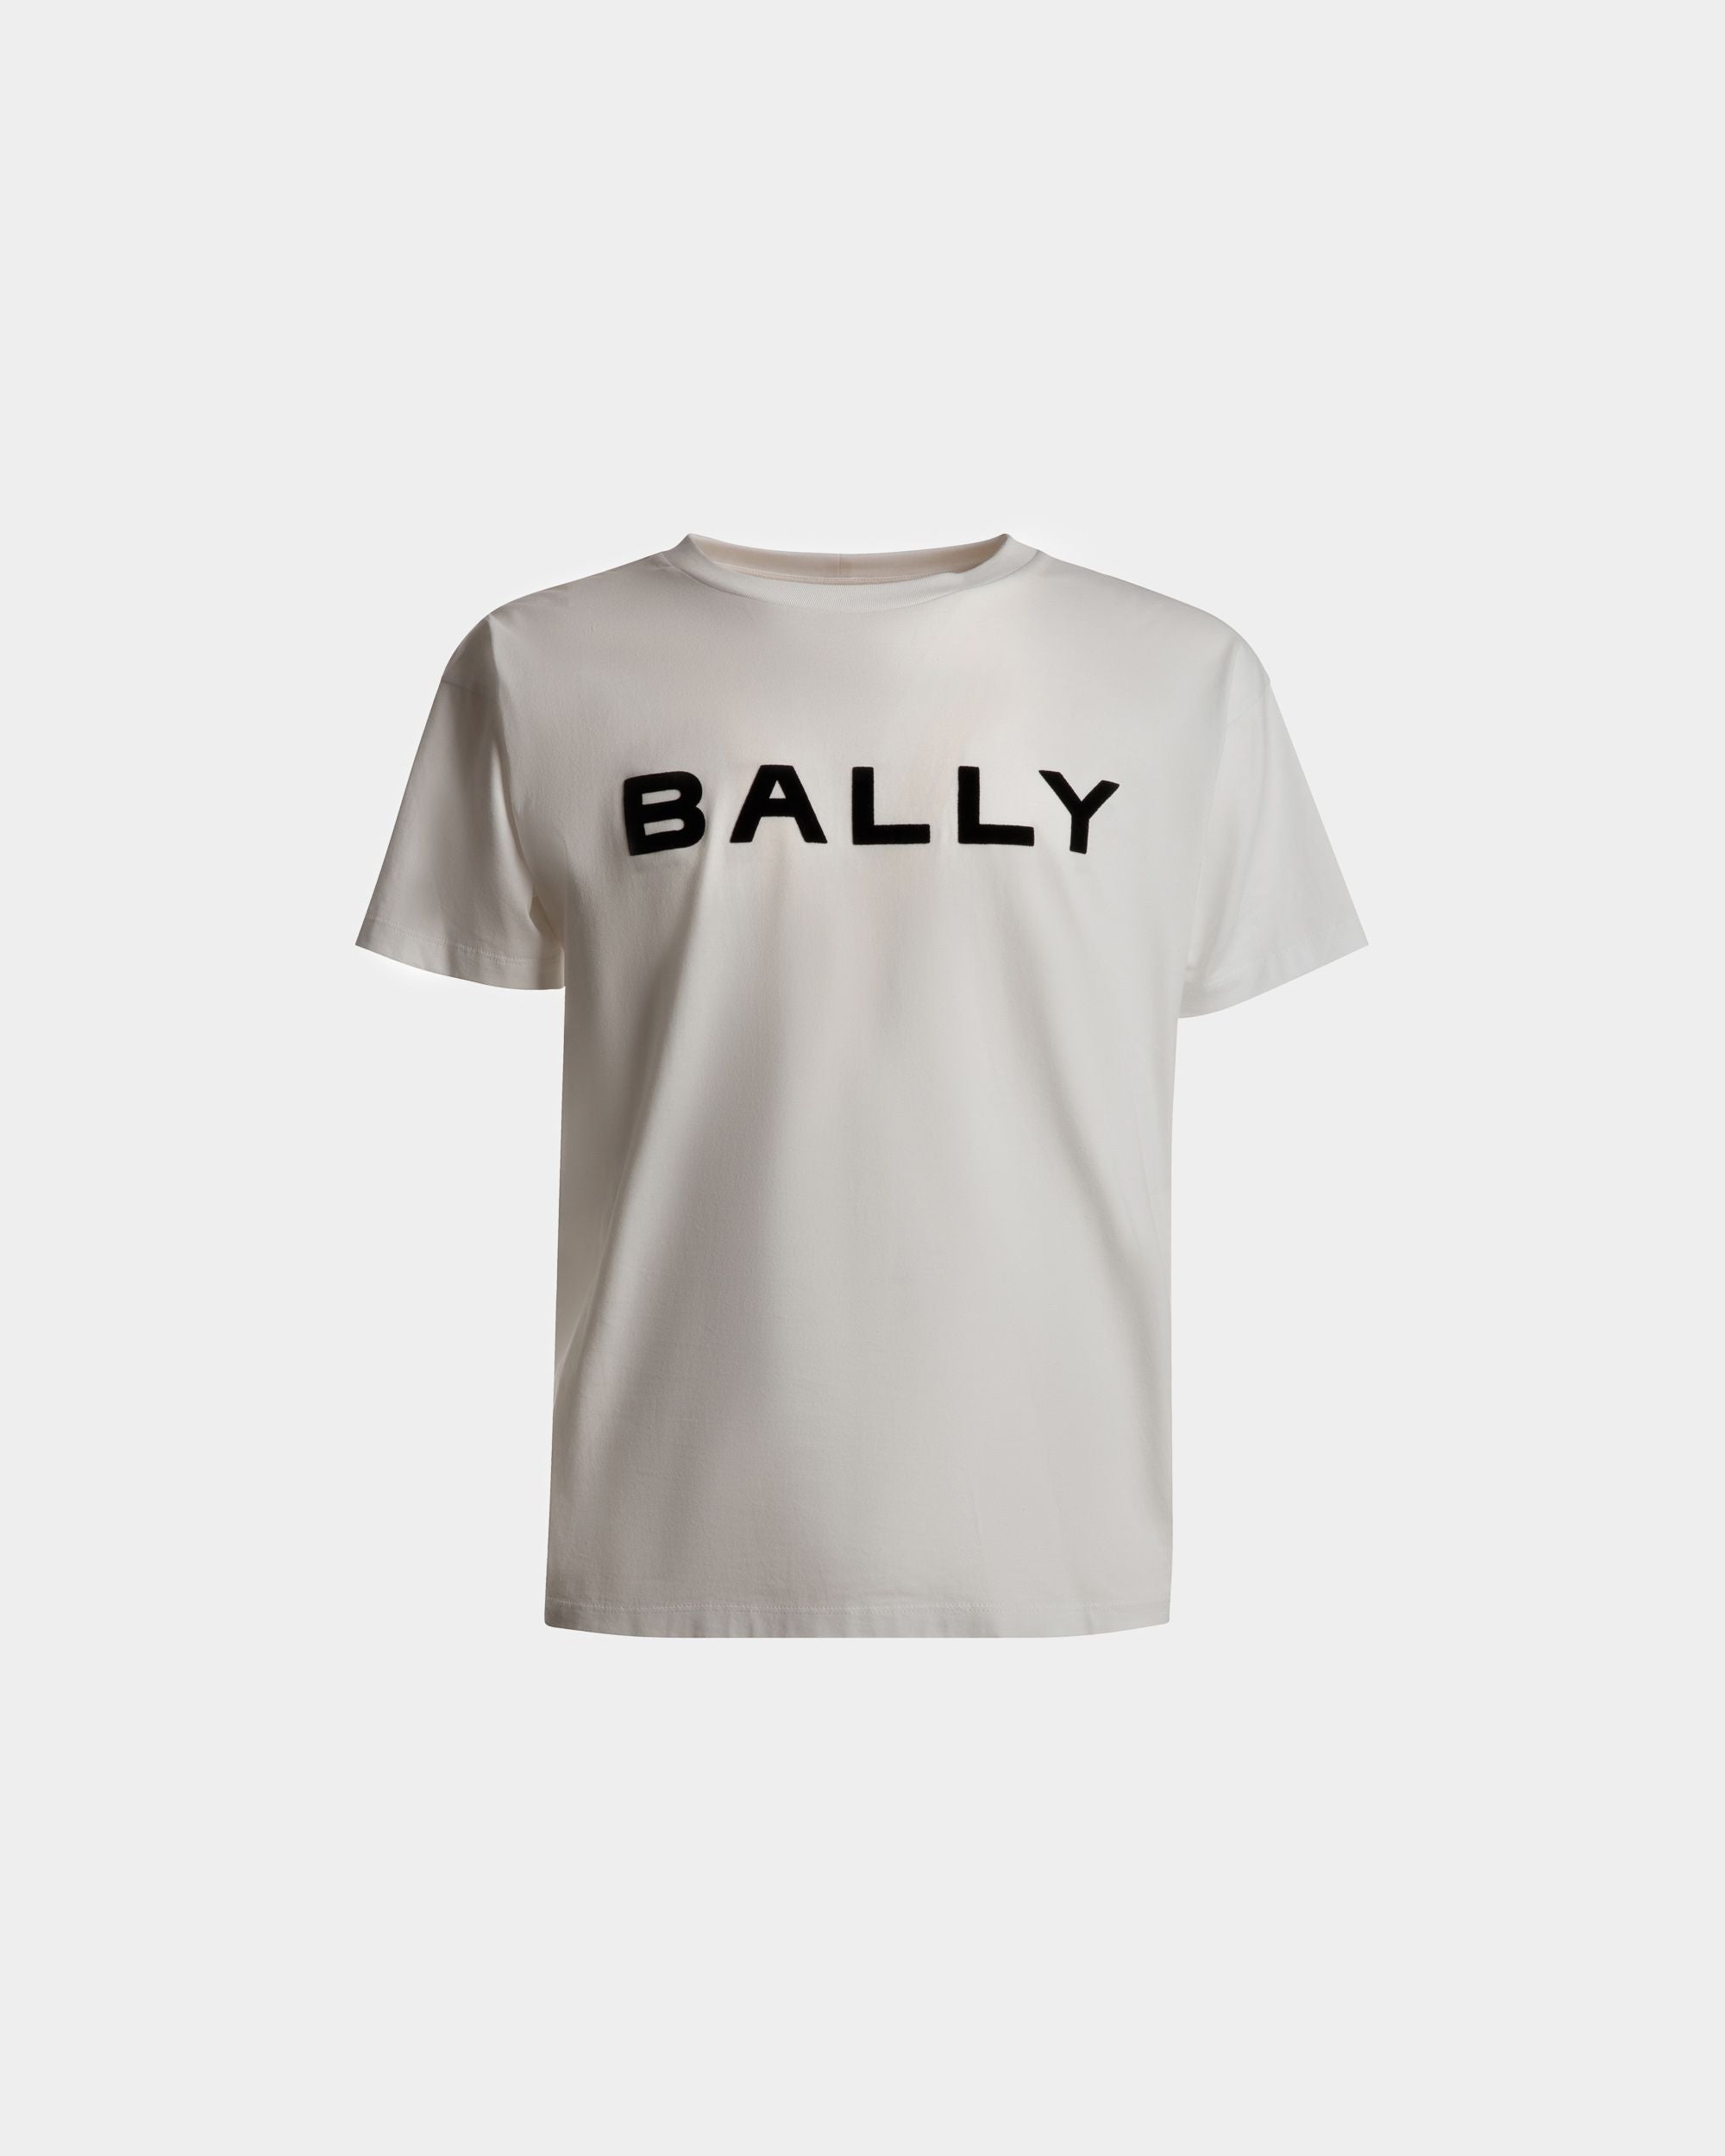 T-shirt logo | T-shirt pour homme | Coton blanc | Bally | Still Life Devant